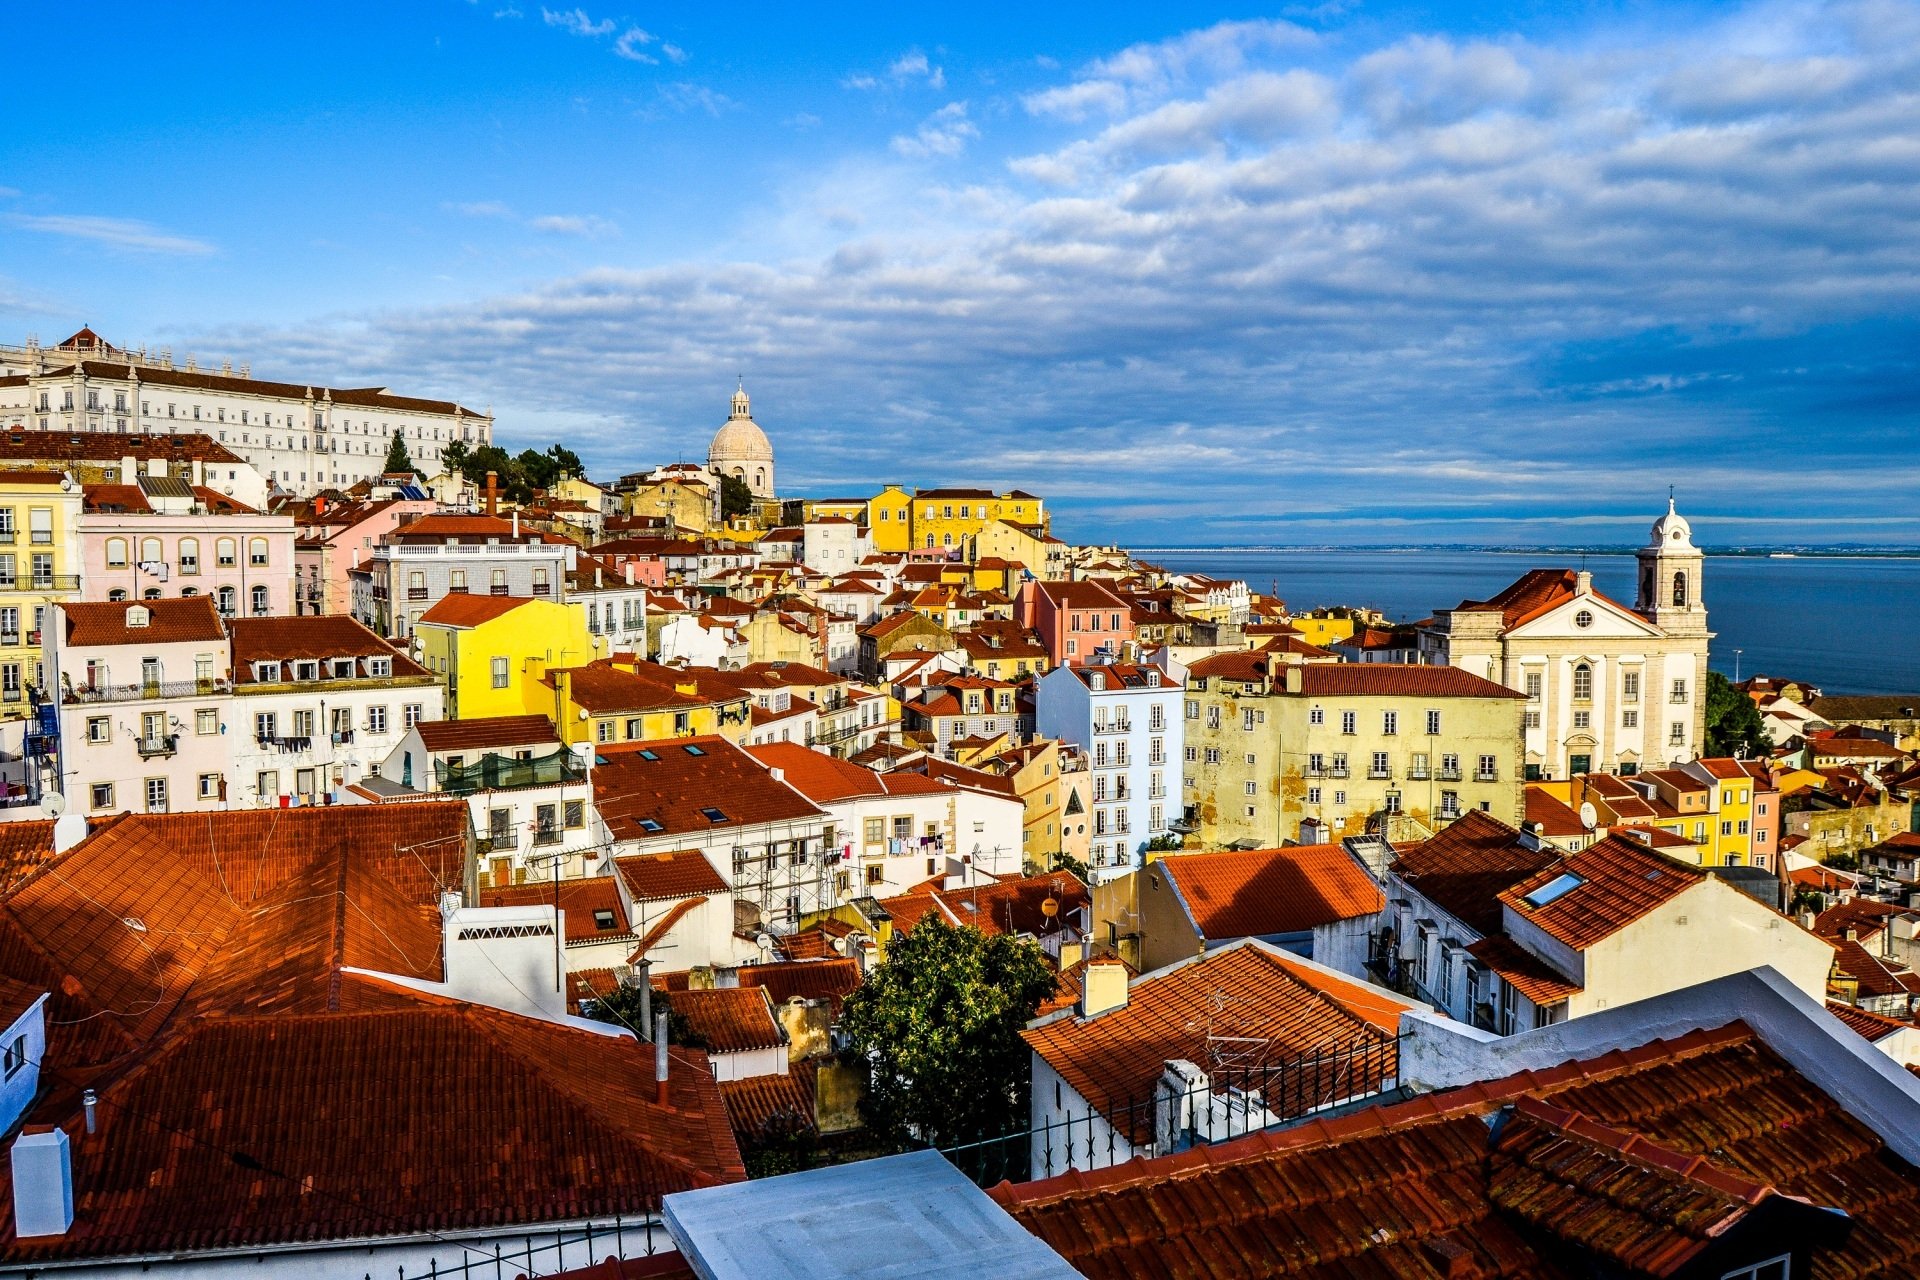 Lisbon, Portugal Cityscape